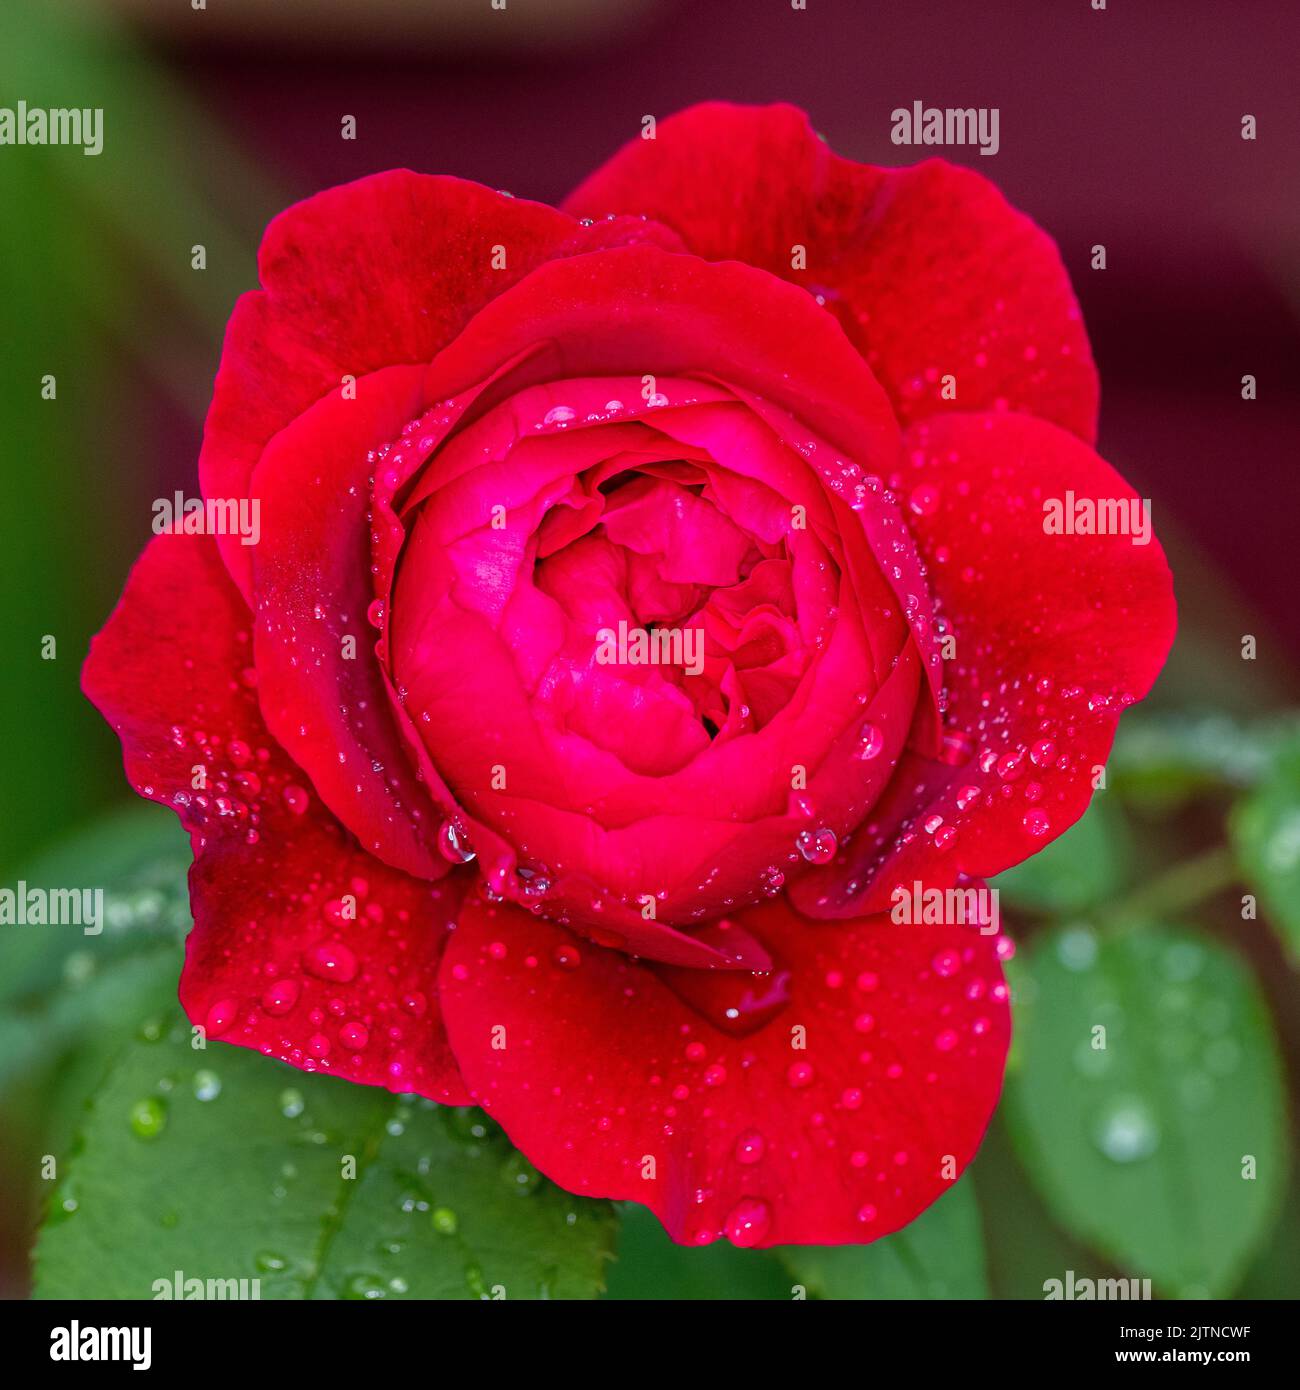 "LD Braithwaite, Auscrim' English Rose, Engelsk ros (rosa) Foto de stock